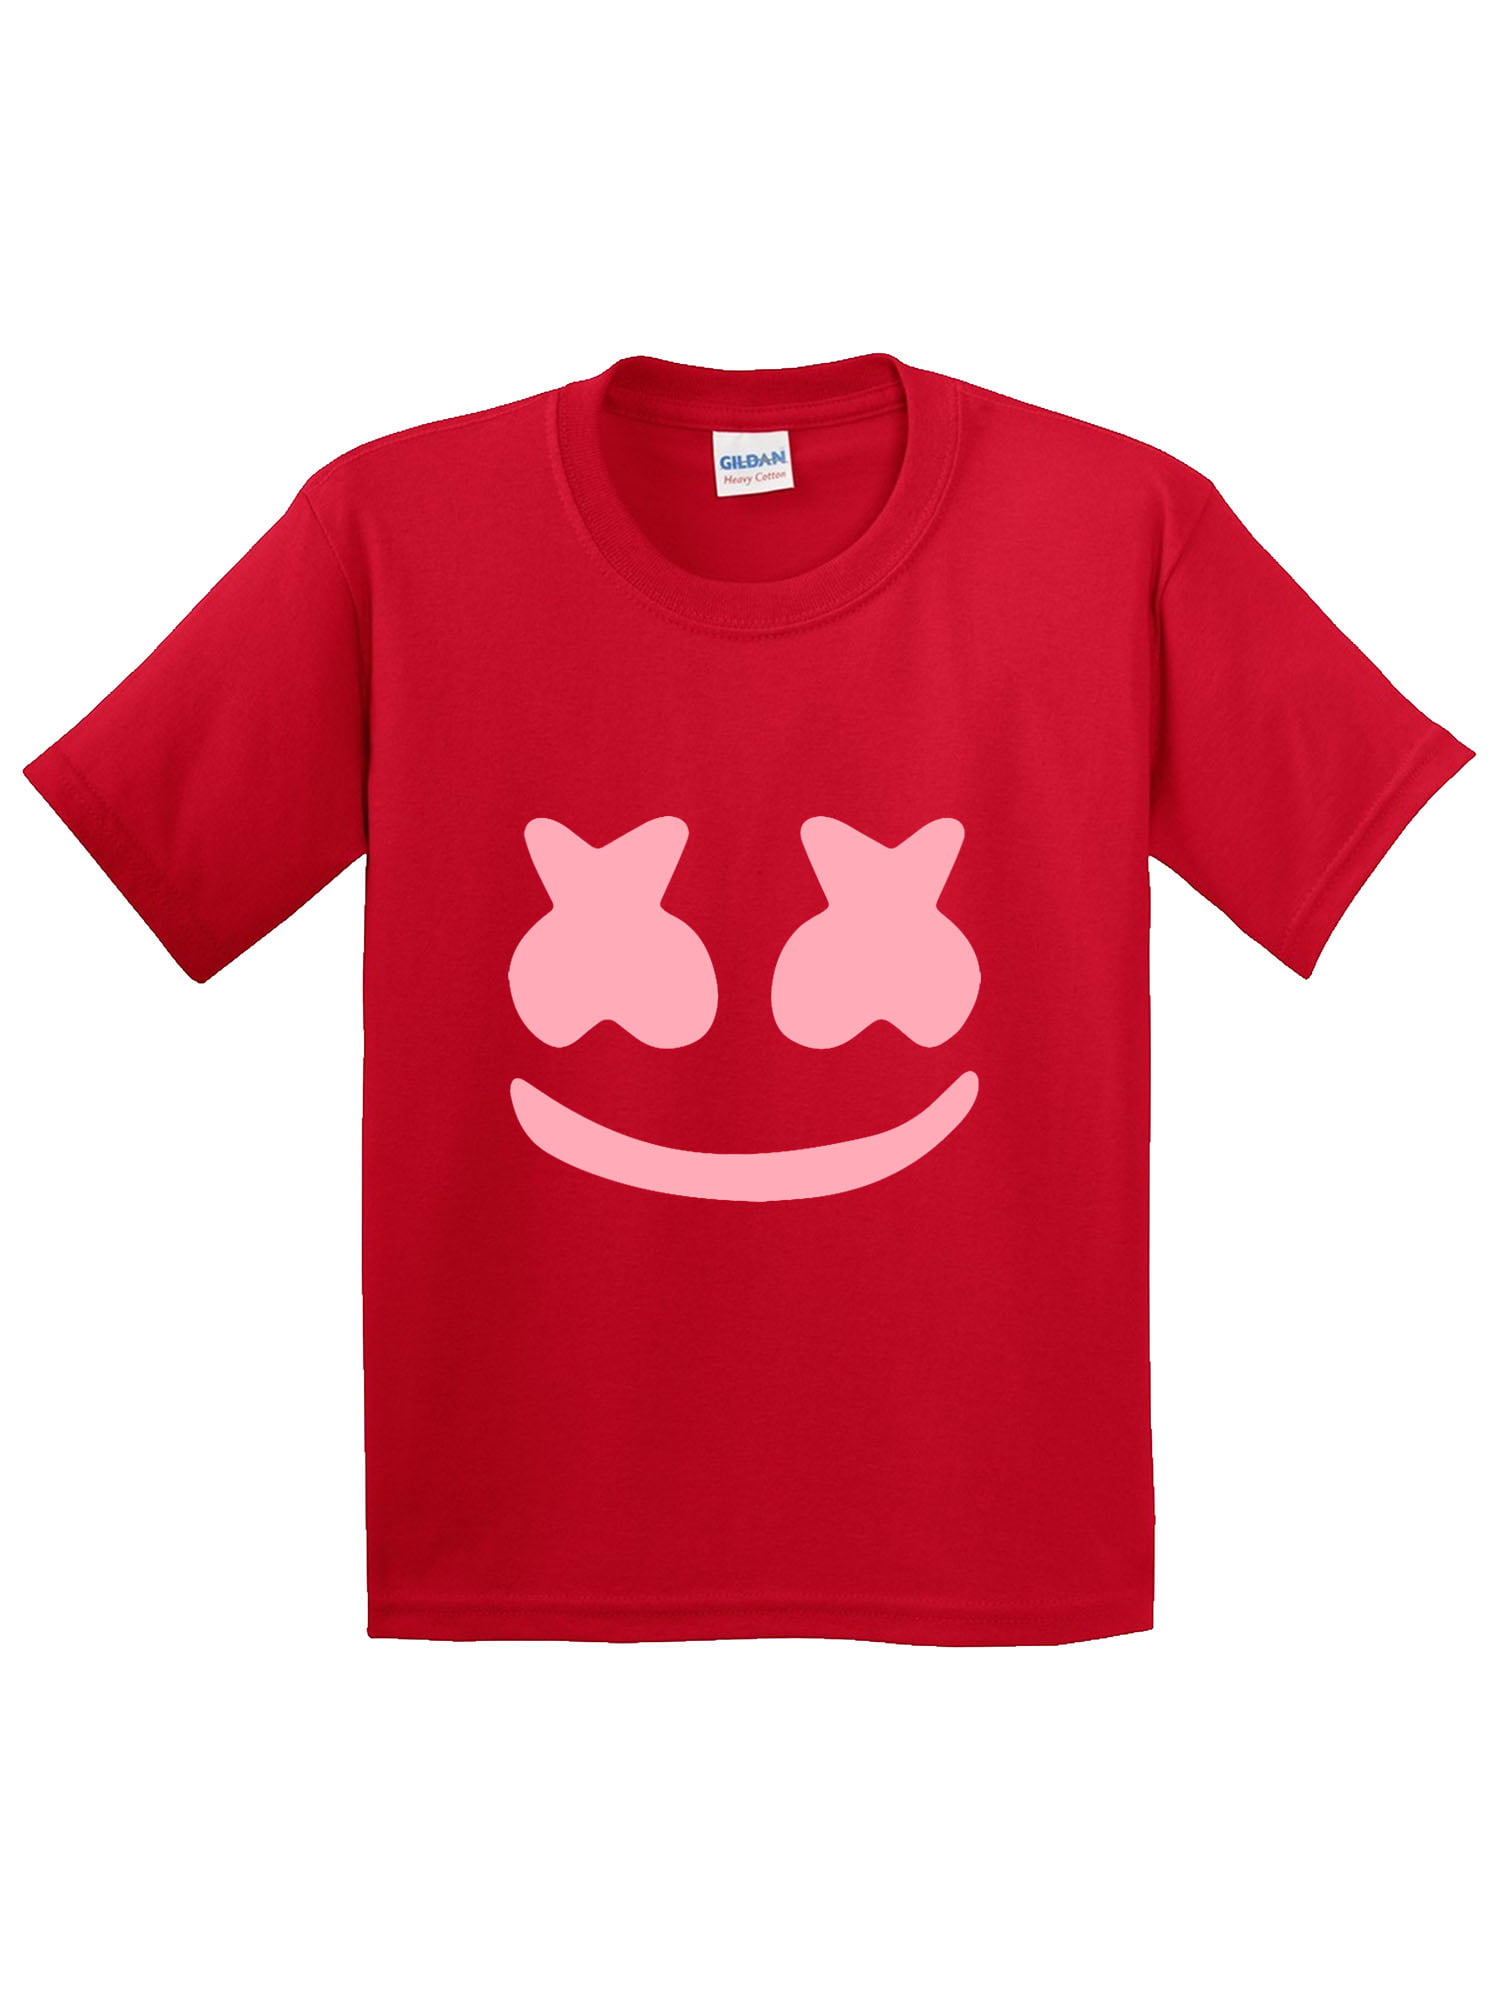 Smiley World Daisy Smiley Unisex Youths Short Sleeve T-Shirt Kids T-Shirt Tops